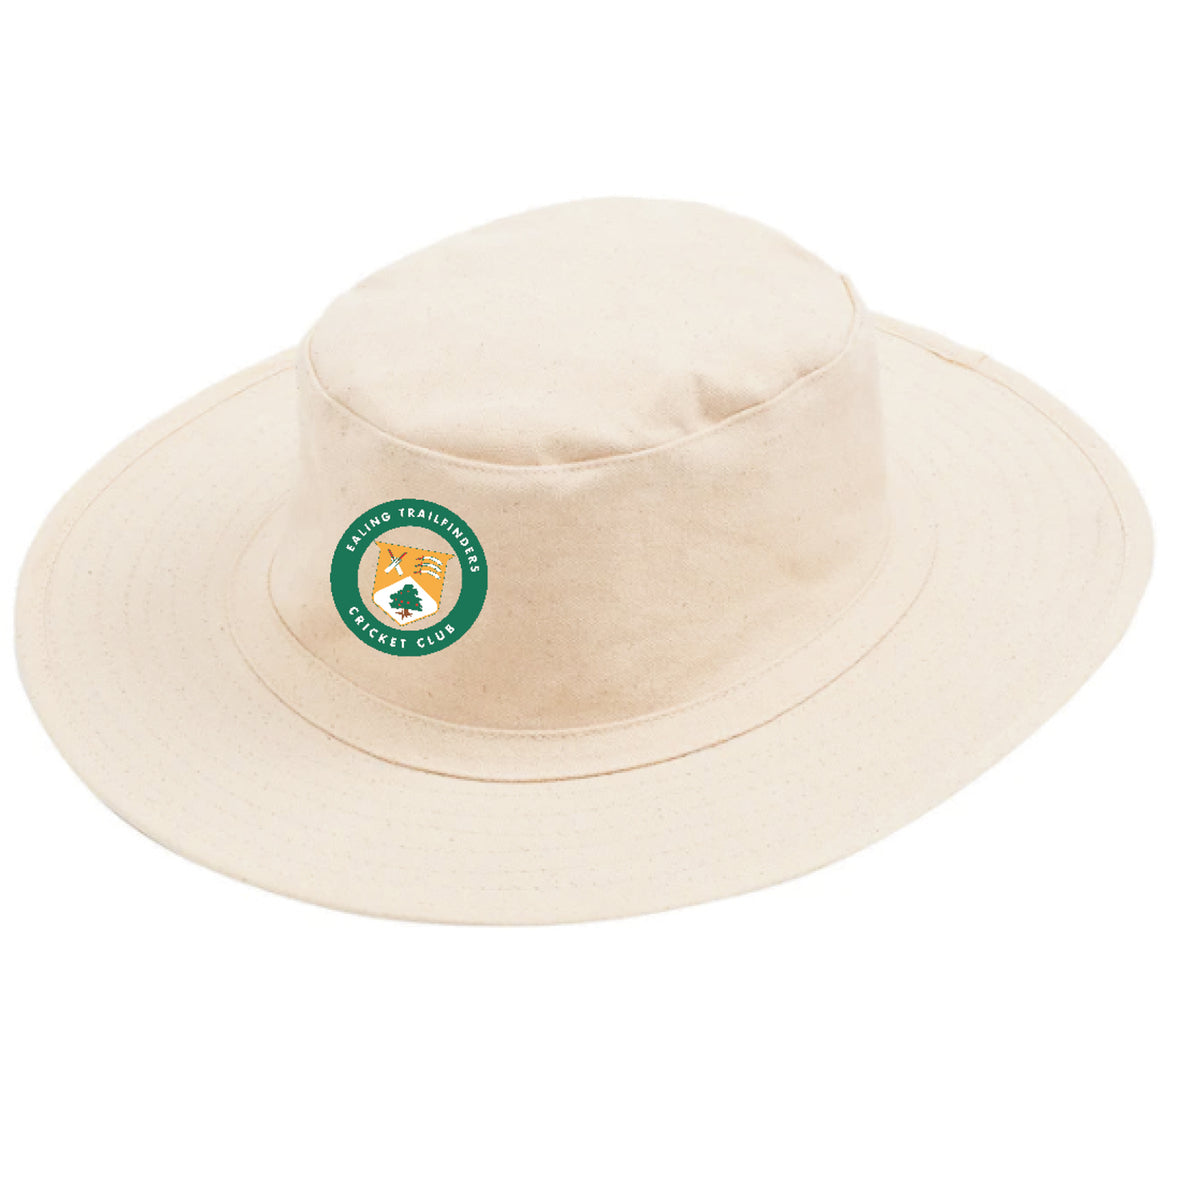 Ealing Trailfinders CC Wide Brim Sun Hat